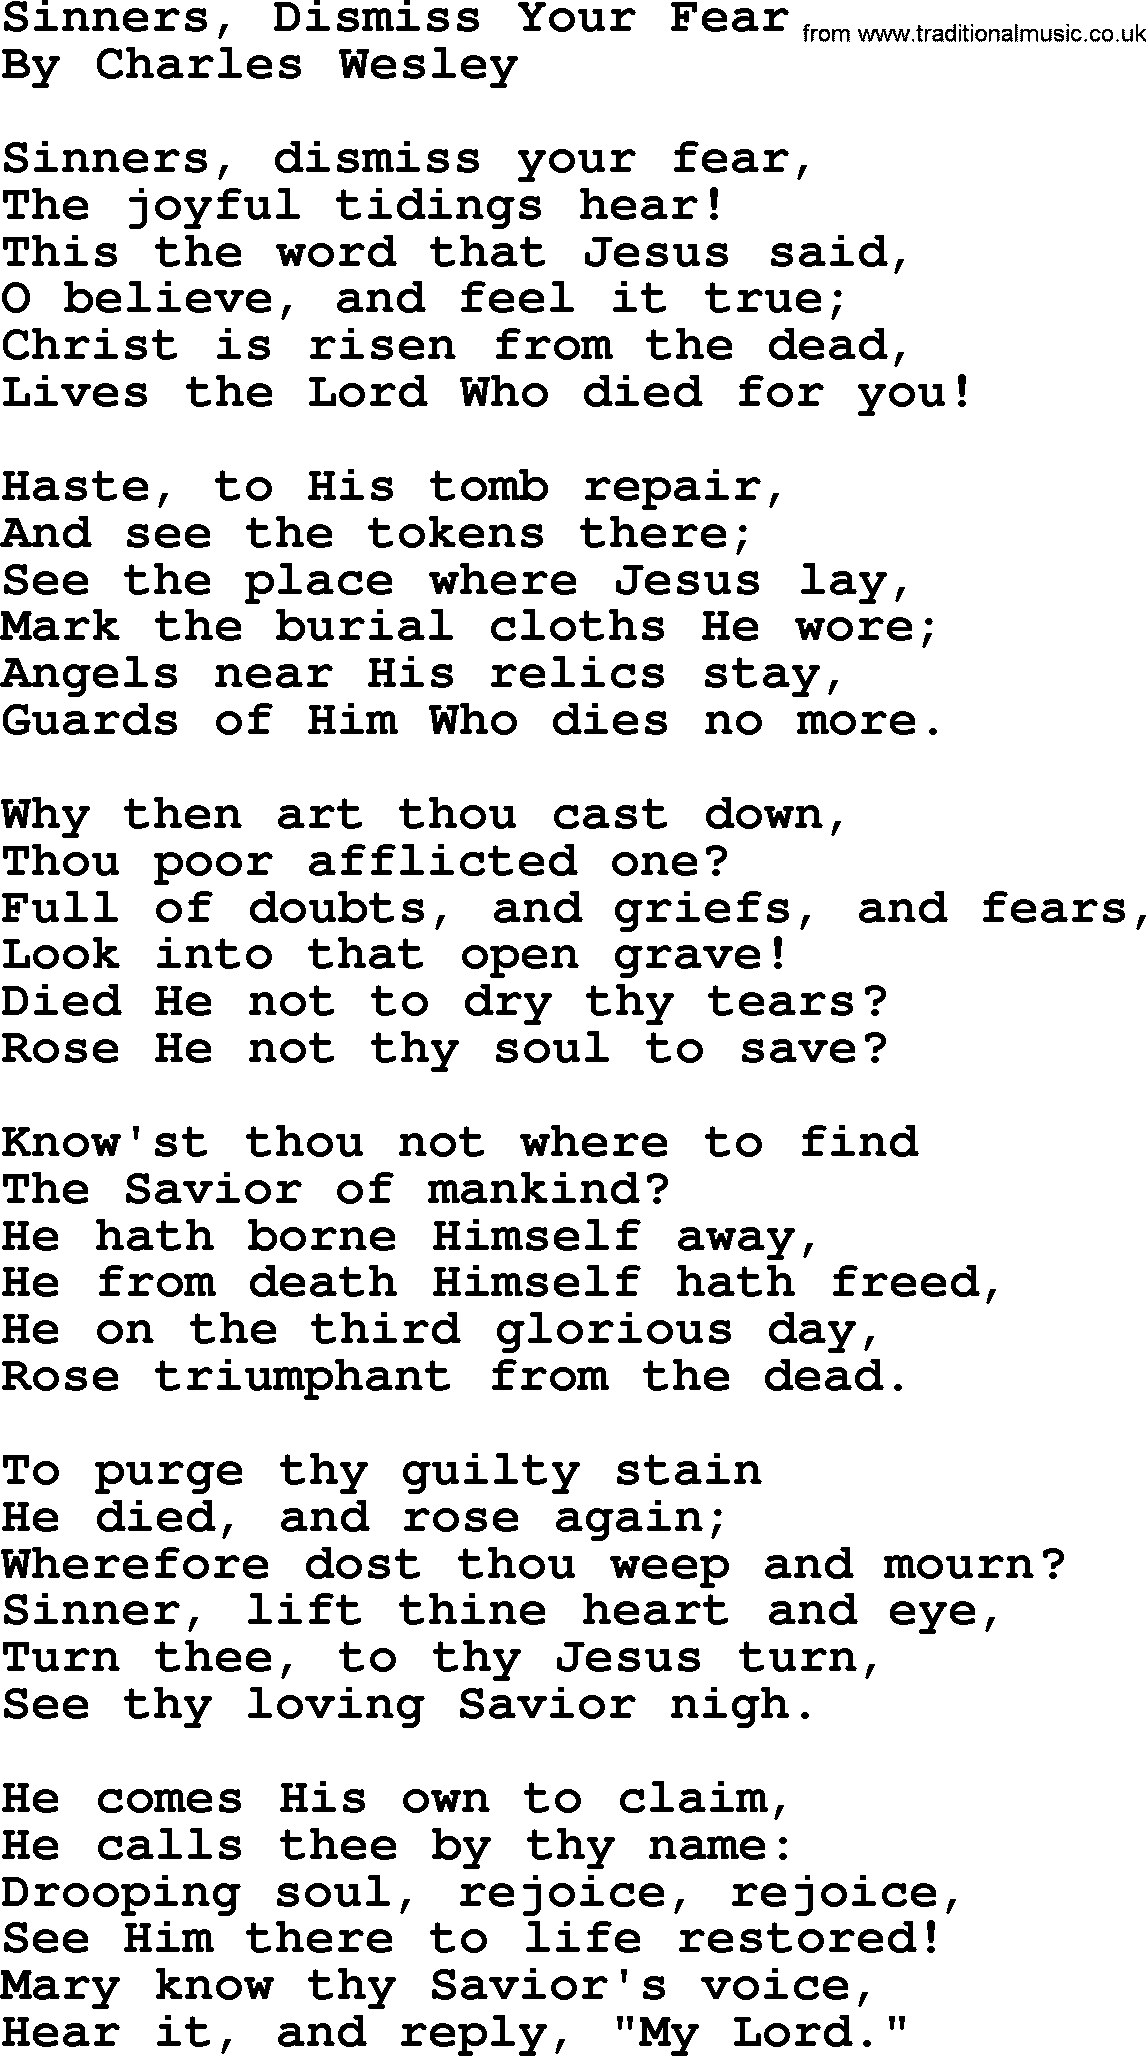 Charles Wesley hymn: Sinners, Dismiss Your Fear, lyrics